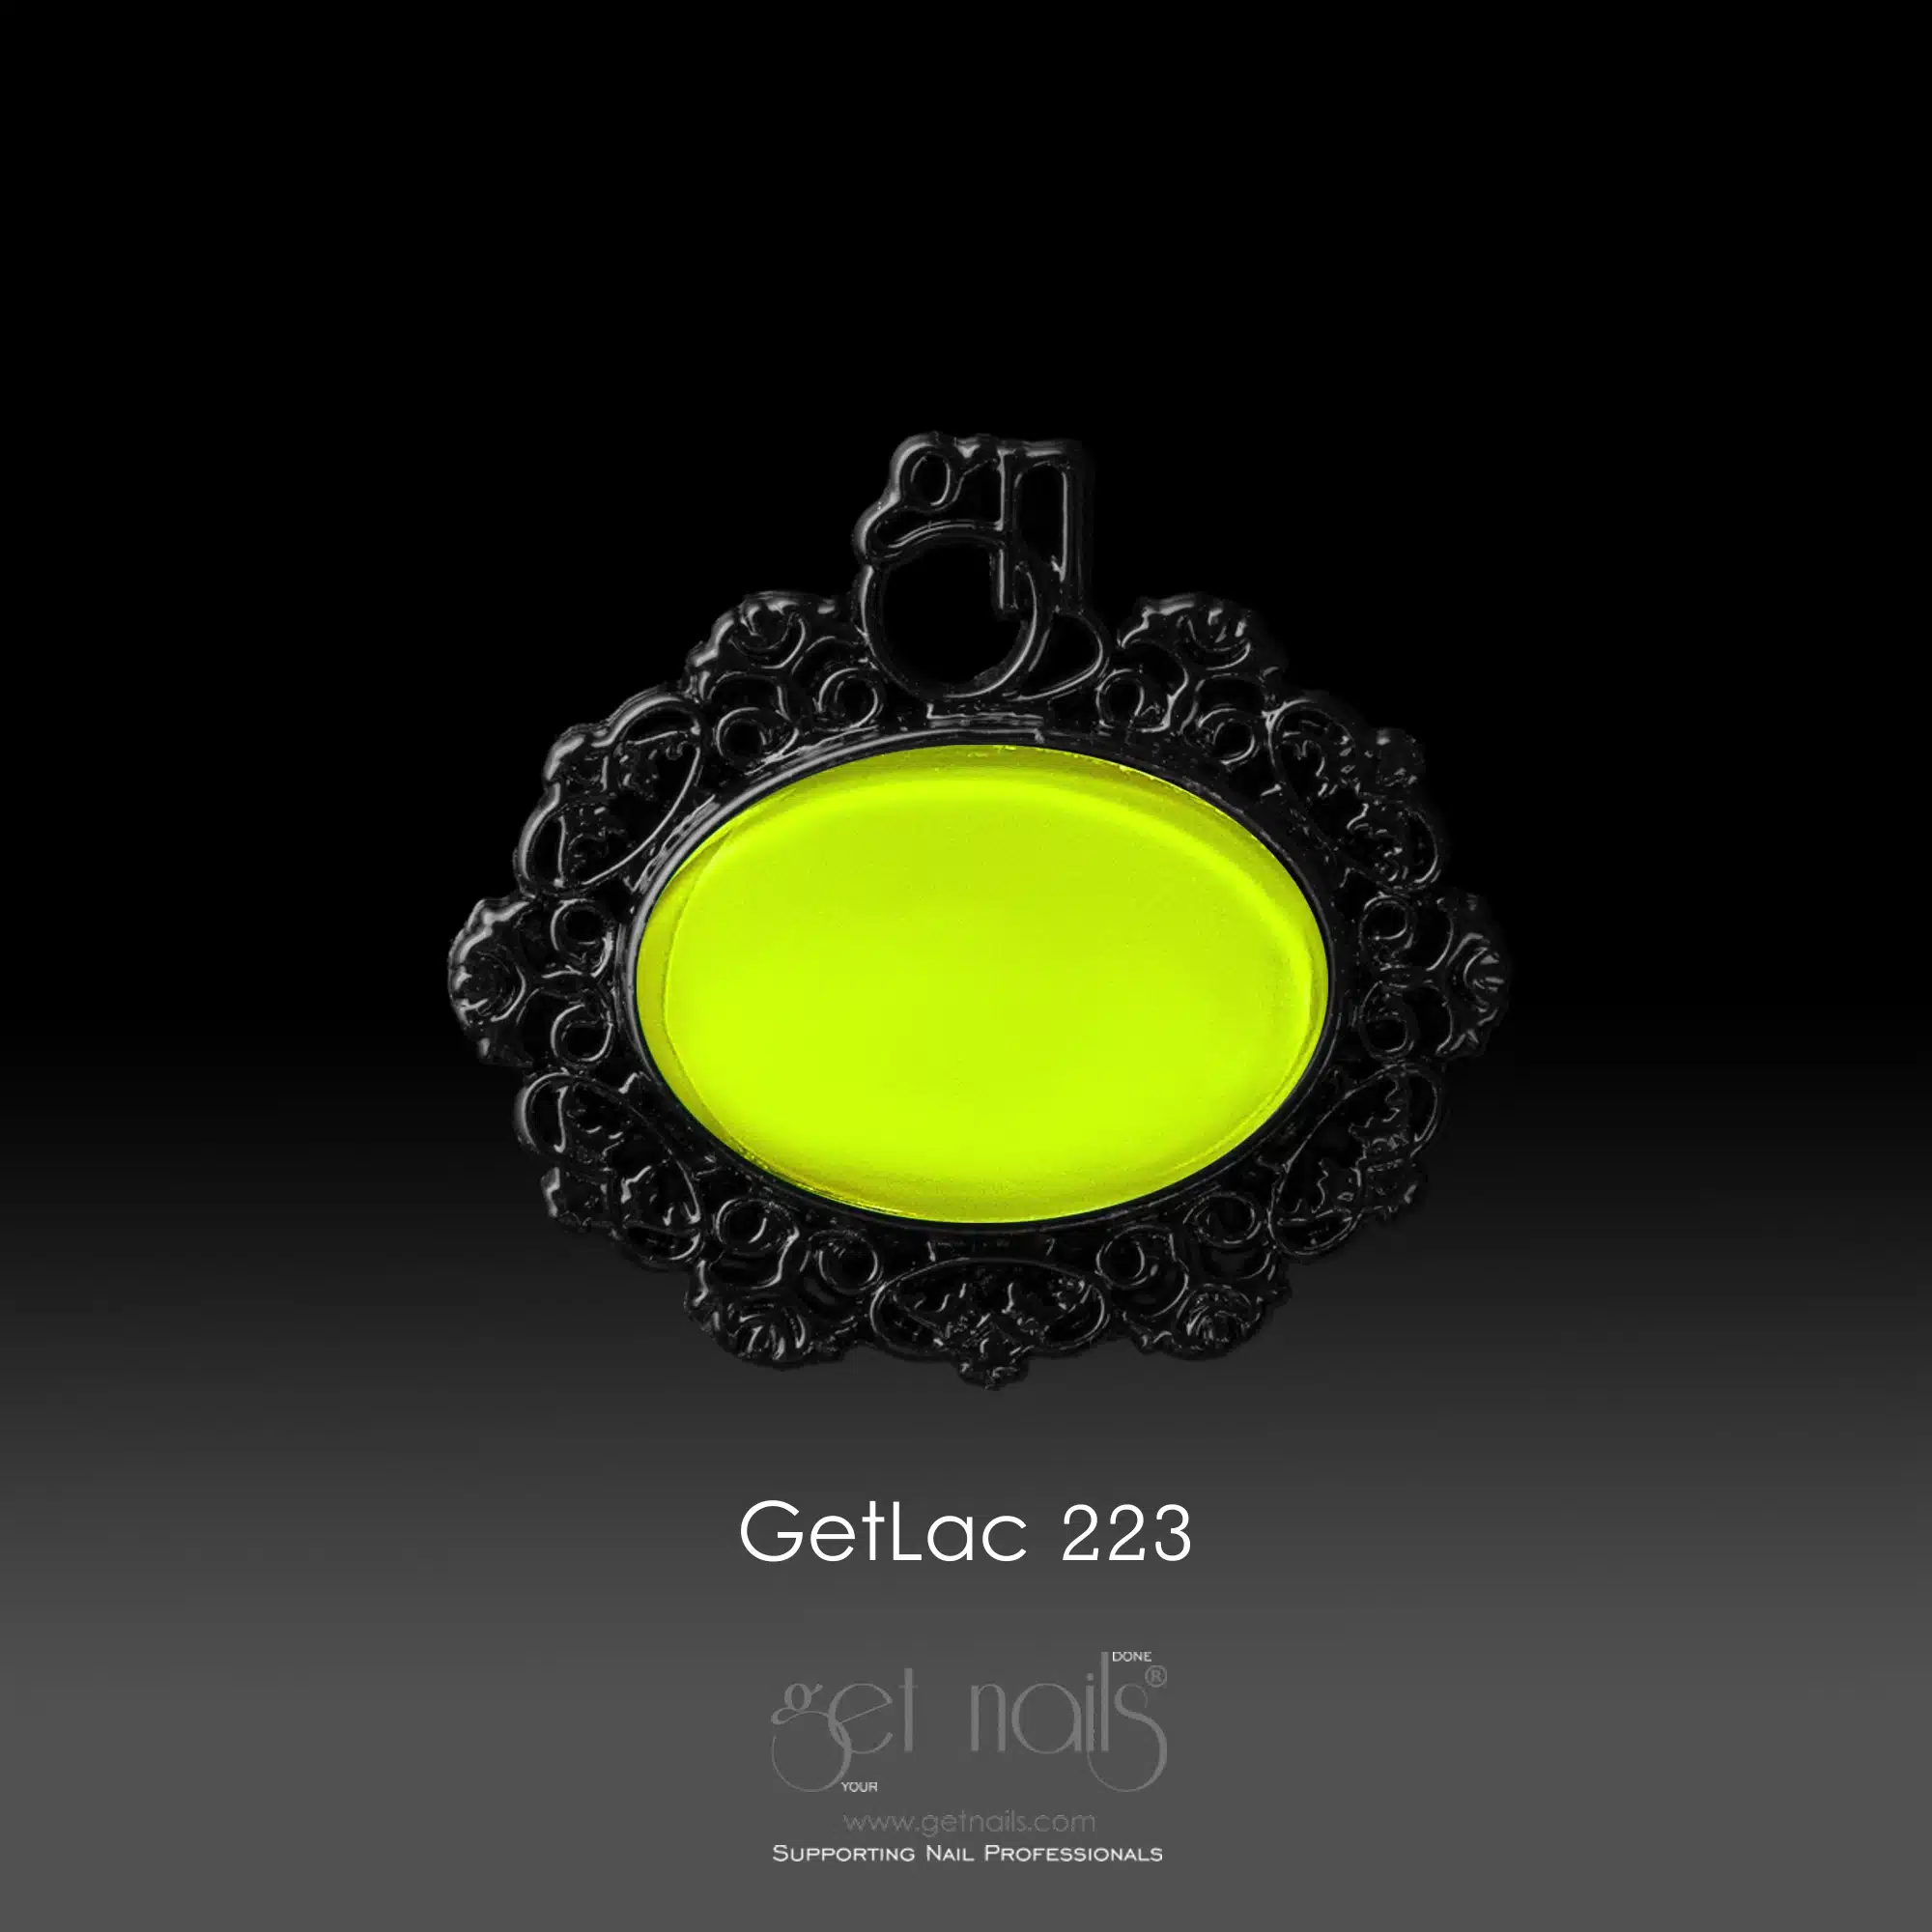 Get Nails Austria - GetLac 223 Neon Yellow 15g